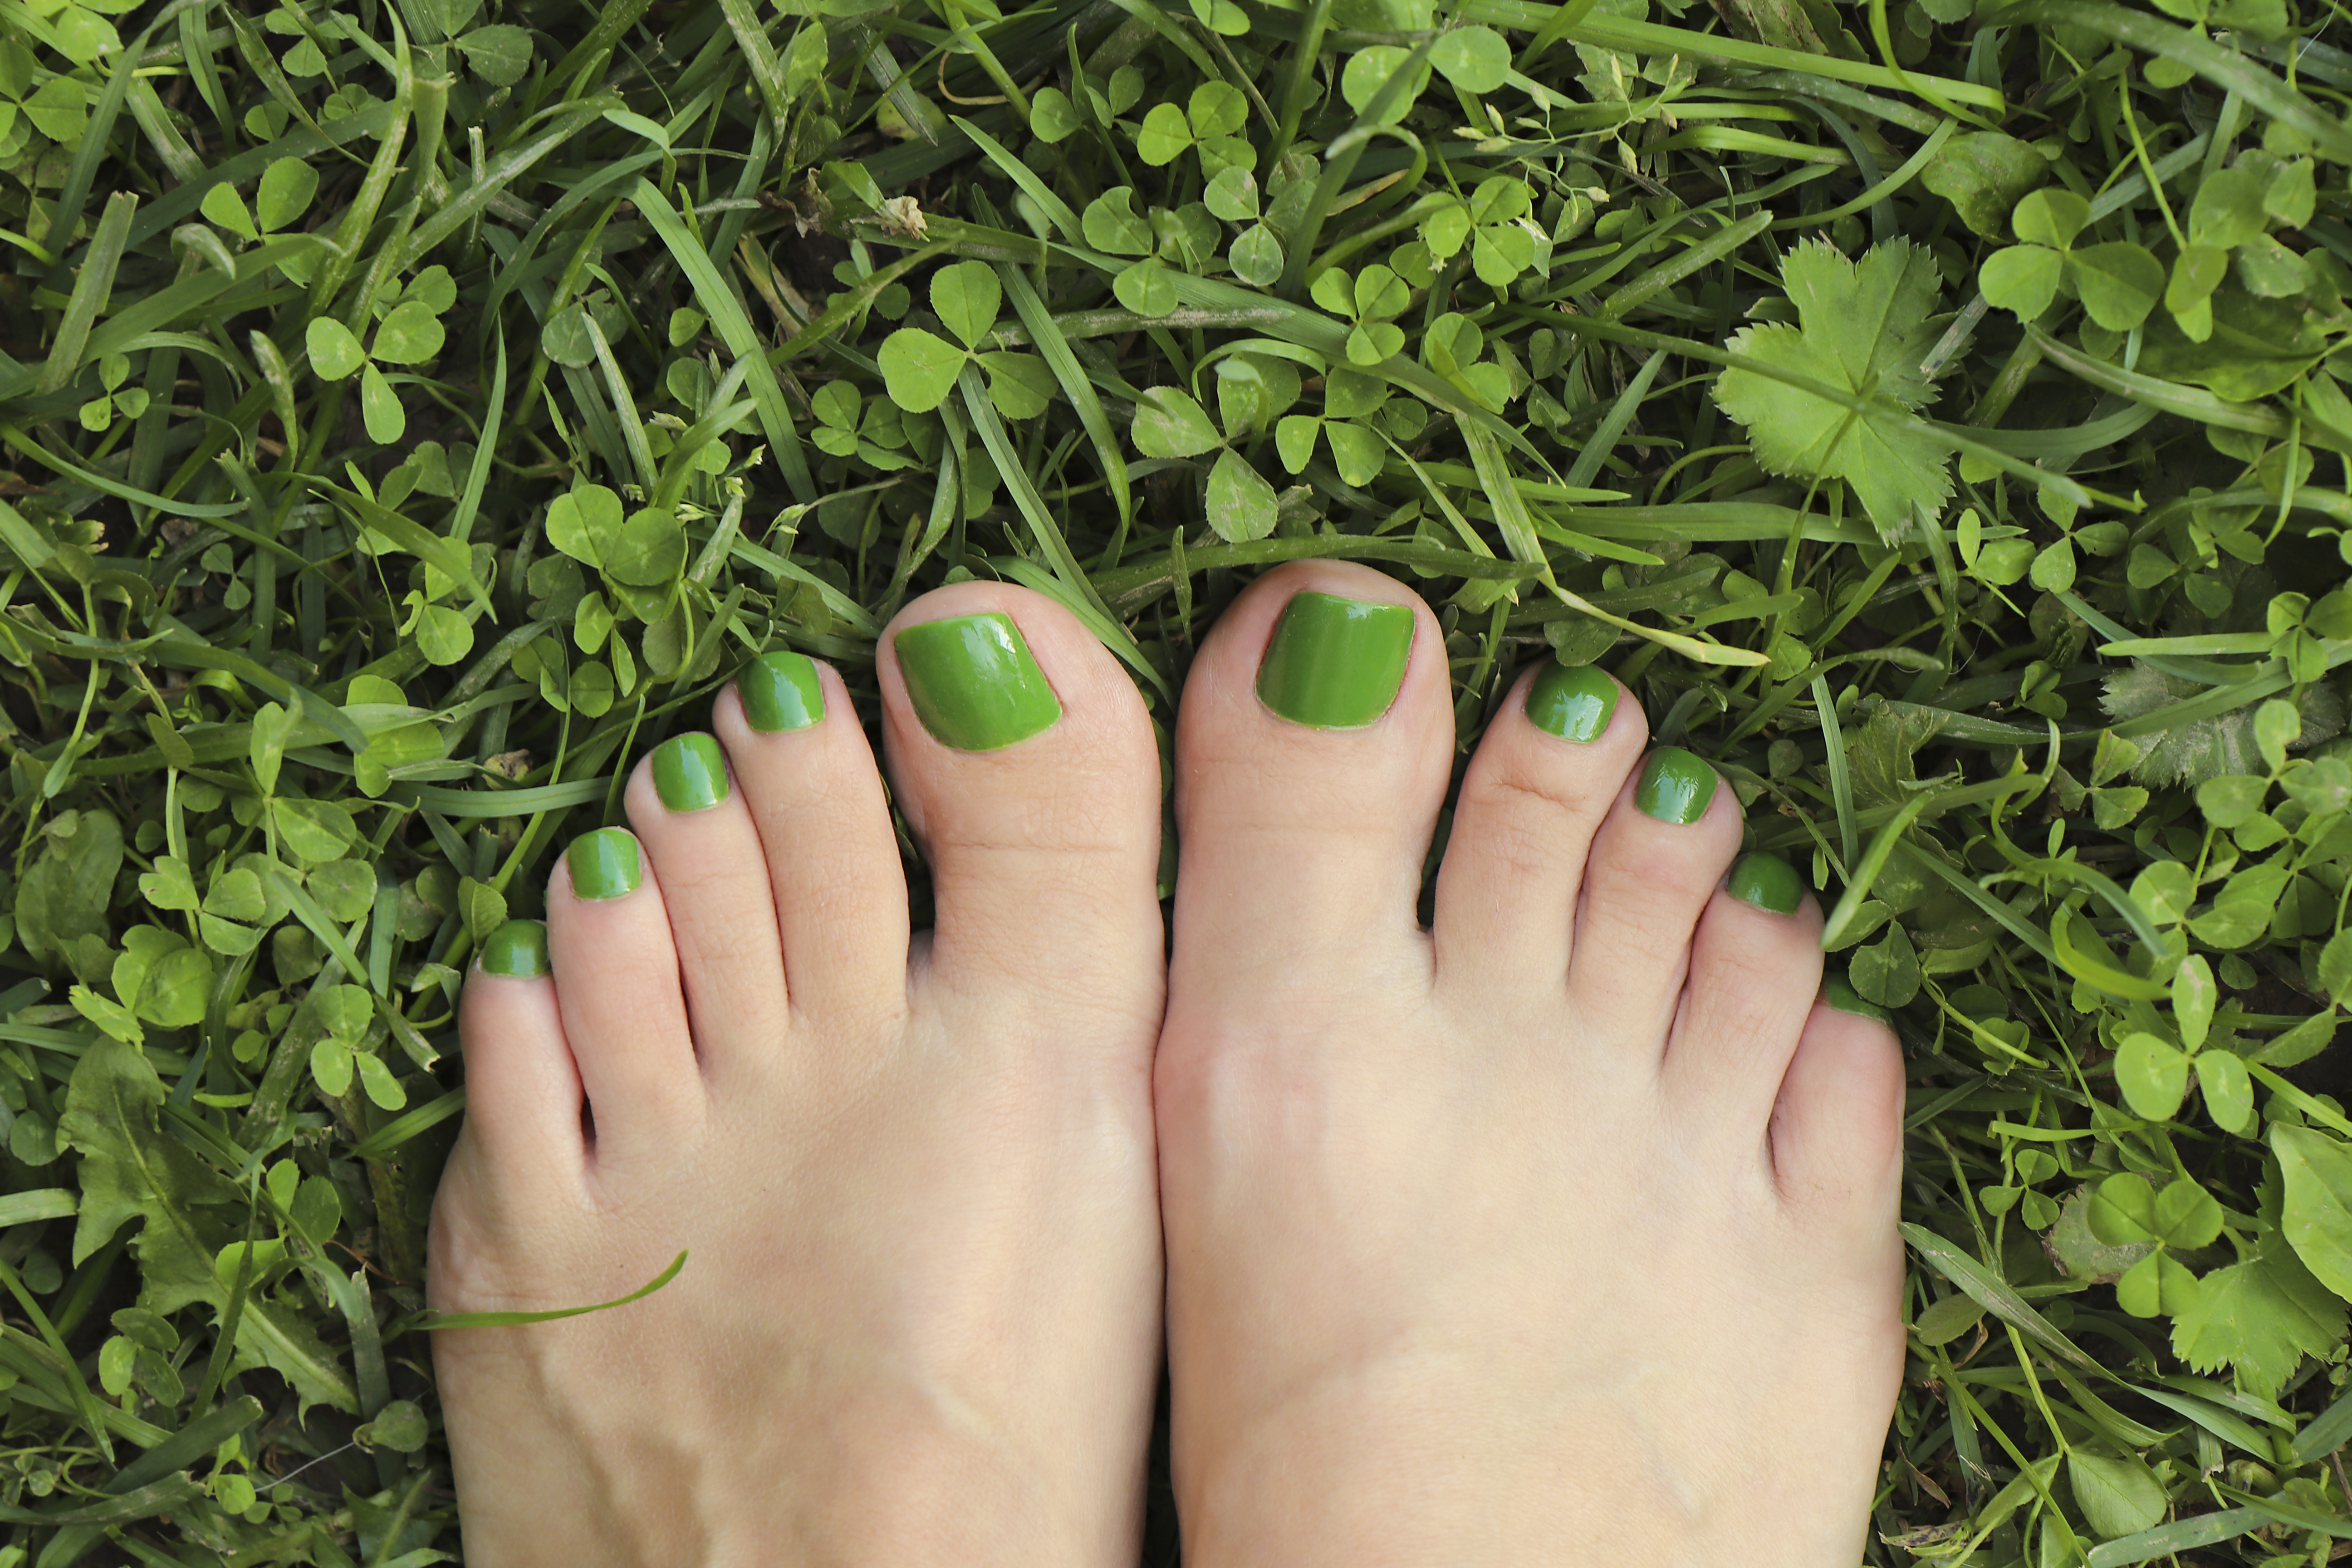 Green nail polish | Source: Getty Images